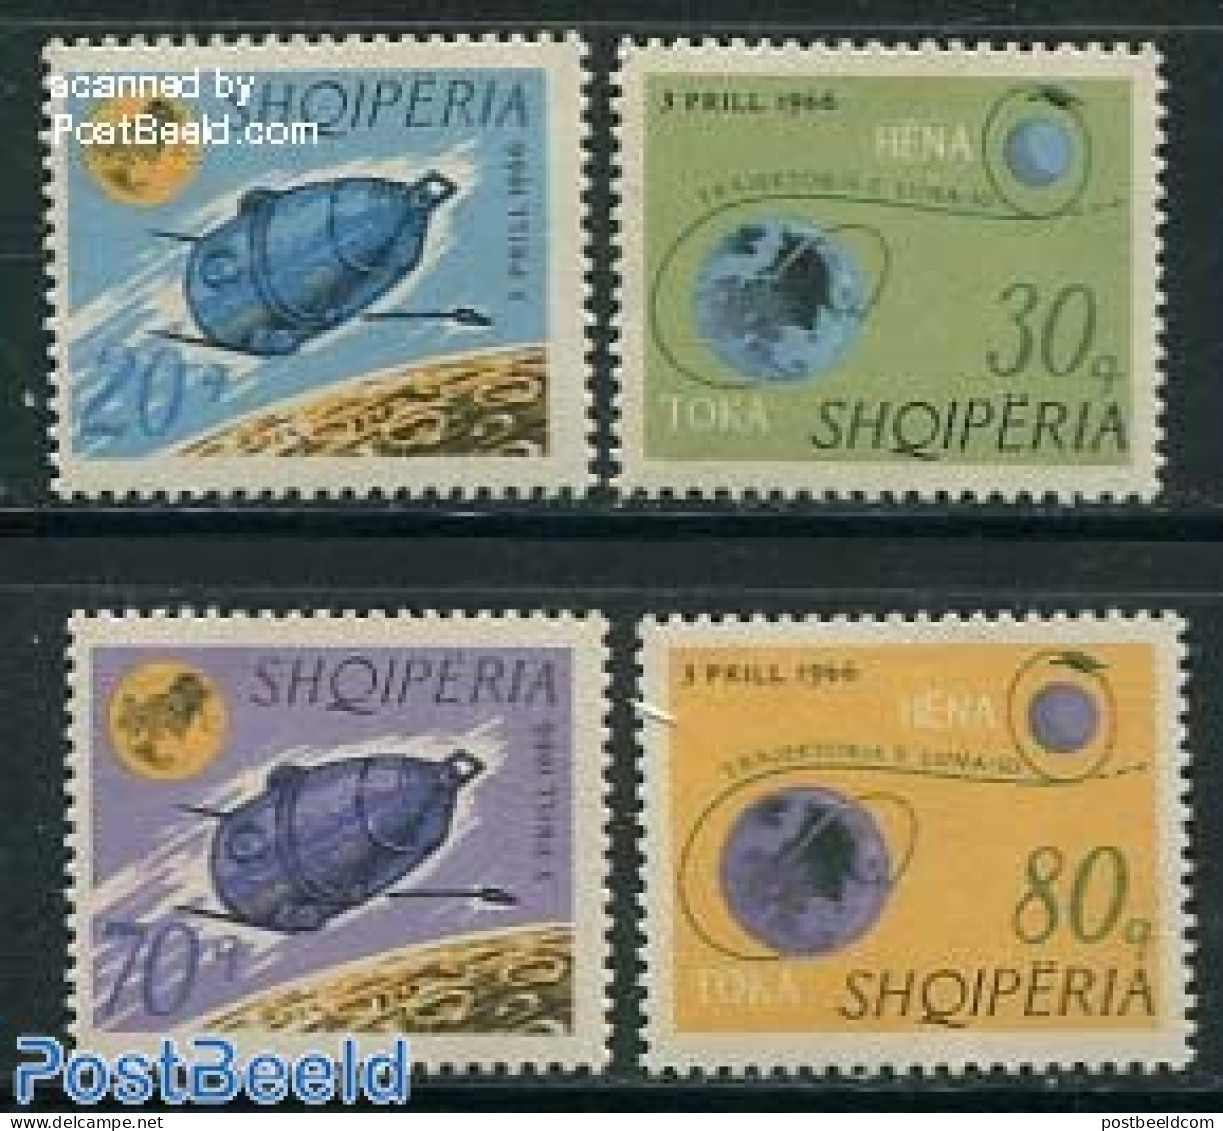 Albania 1966 Luna 10 4v, Mint NH, Transport - Space Exploration - Albania